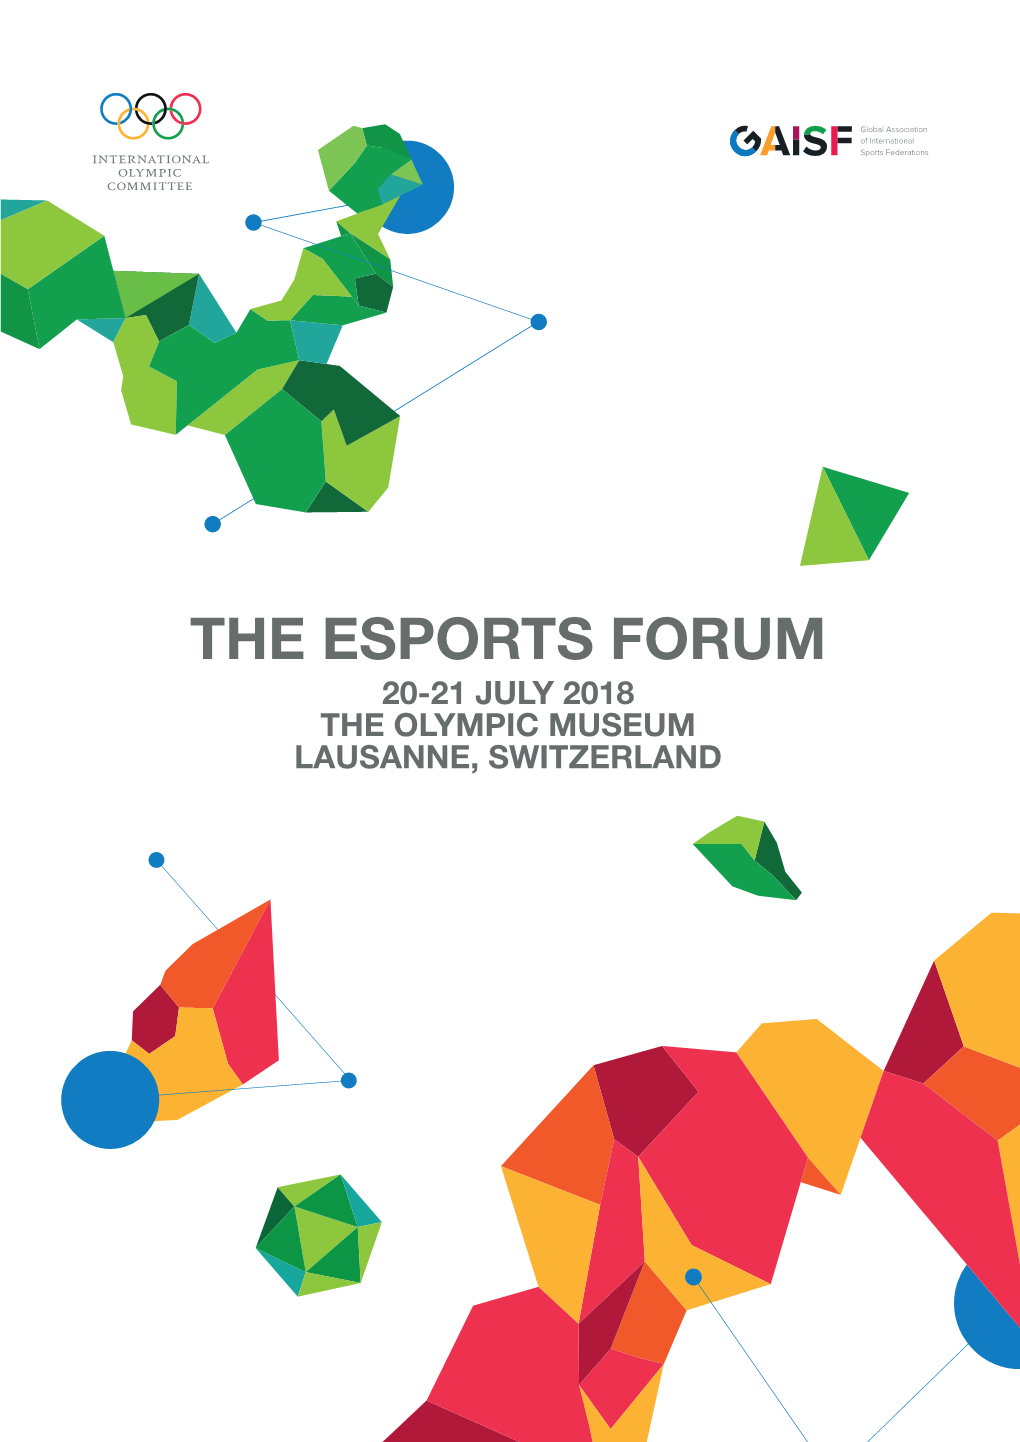 The Esports Forum